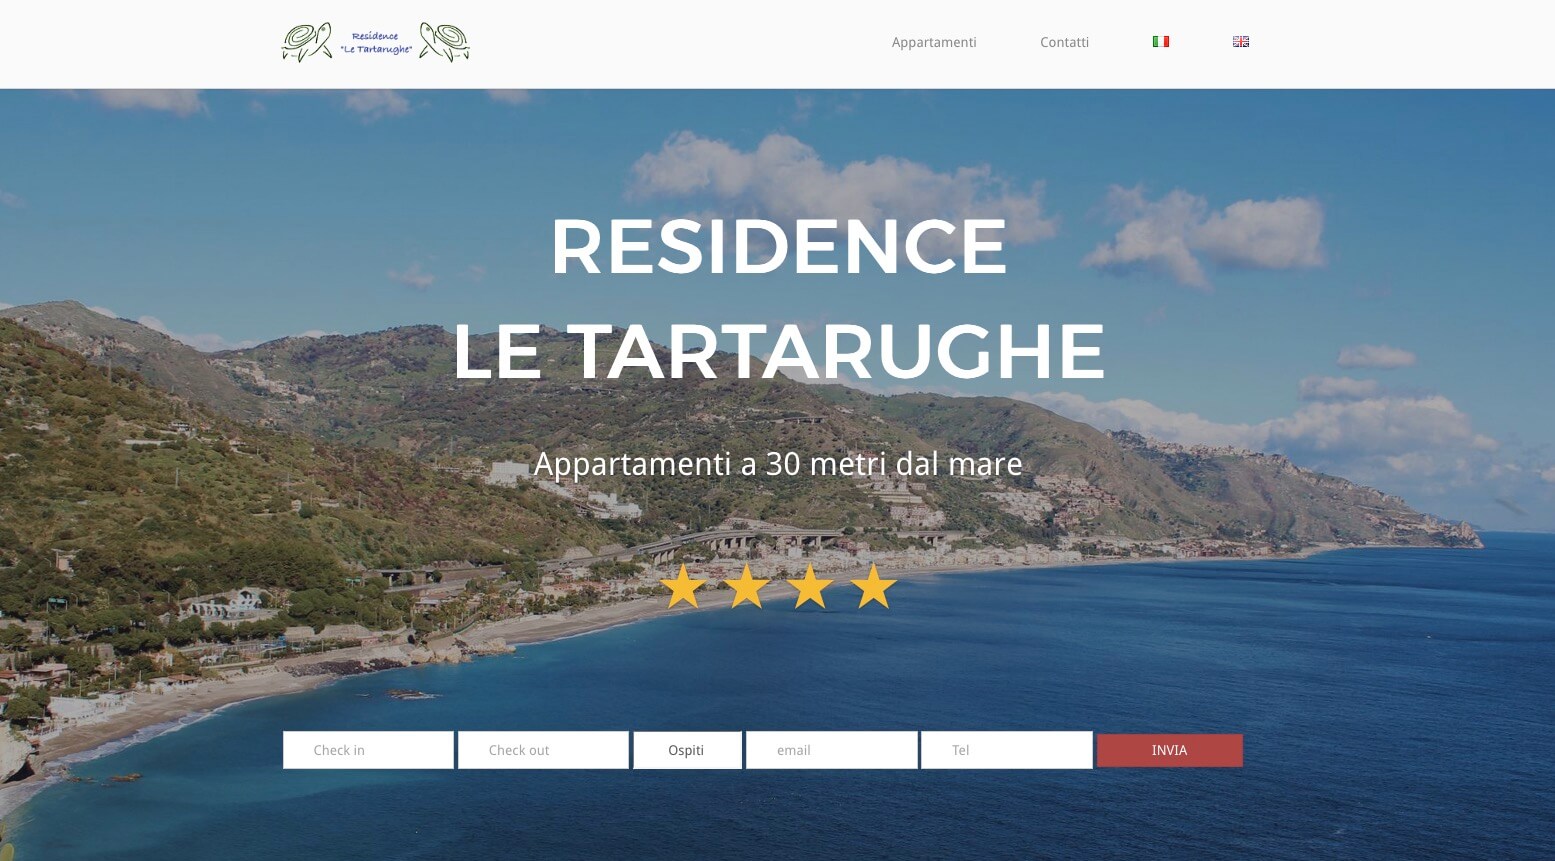 Residence "Le Tartarughe"